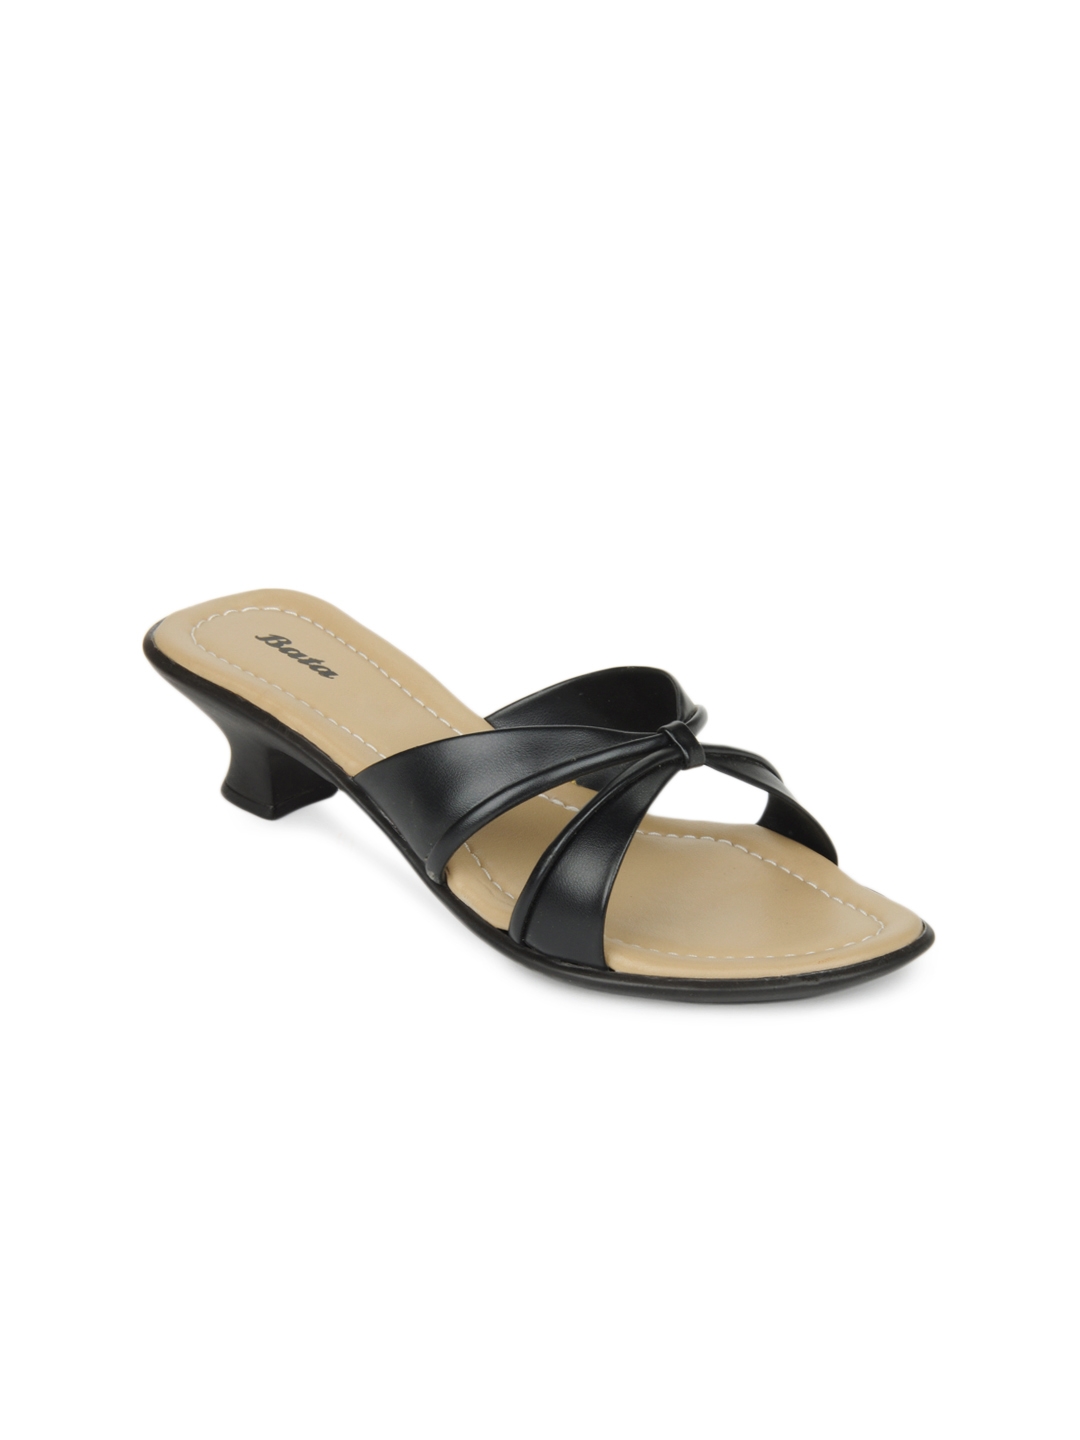 Synthetic Bata Black Sandals For Men F864600600